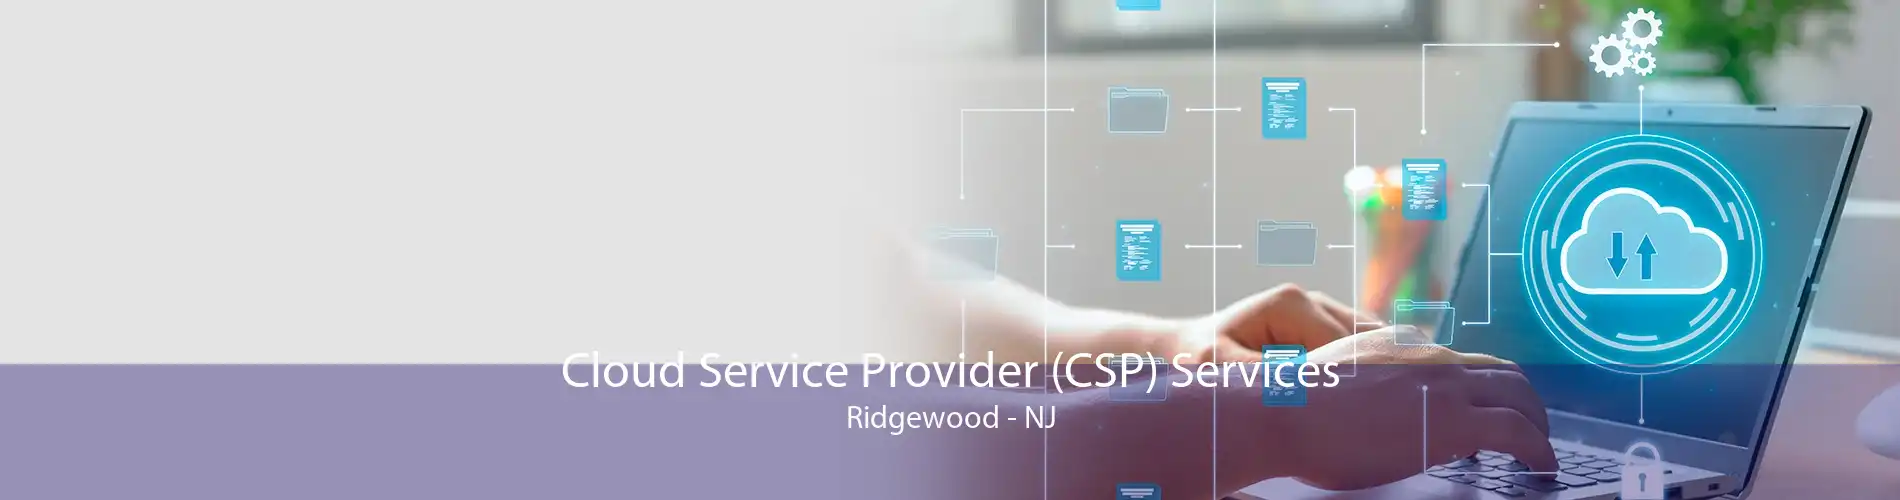 Cloud Service Provider (CSP) Services Ridgewood - NJ